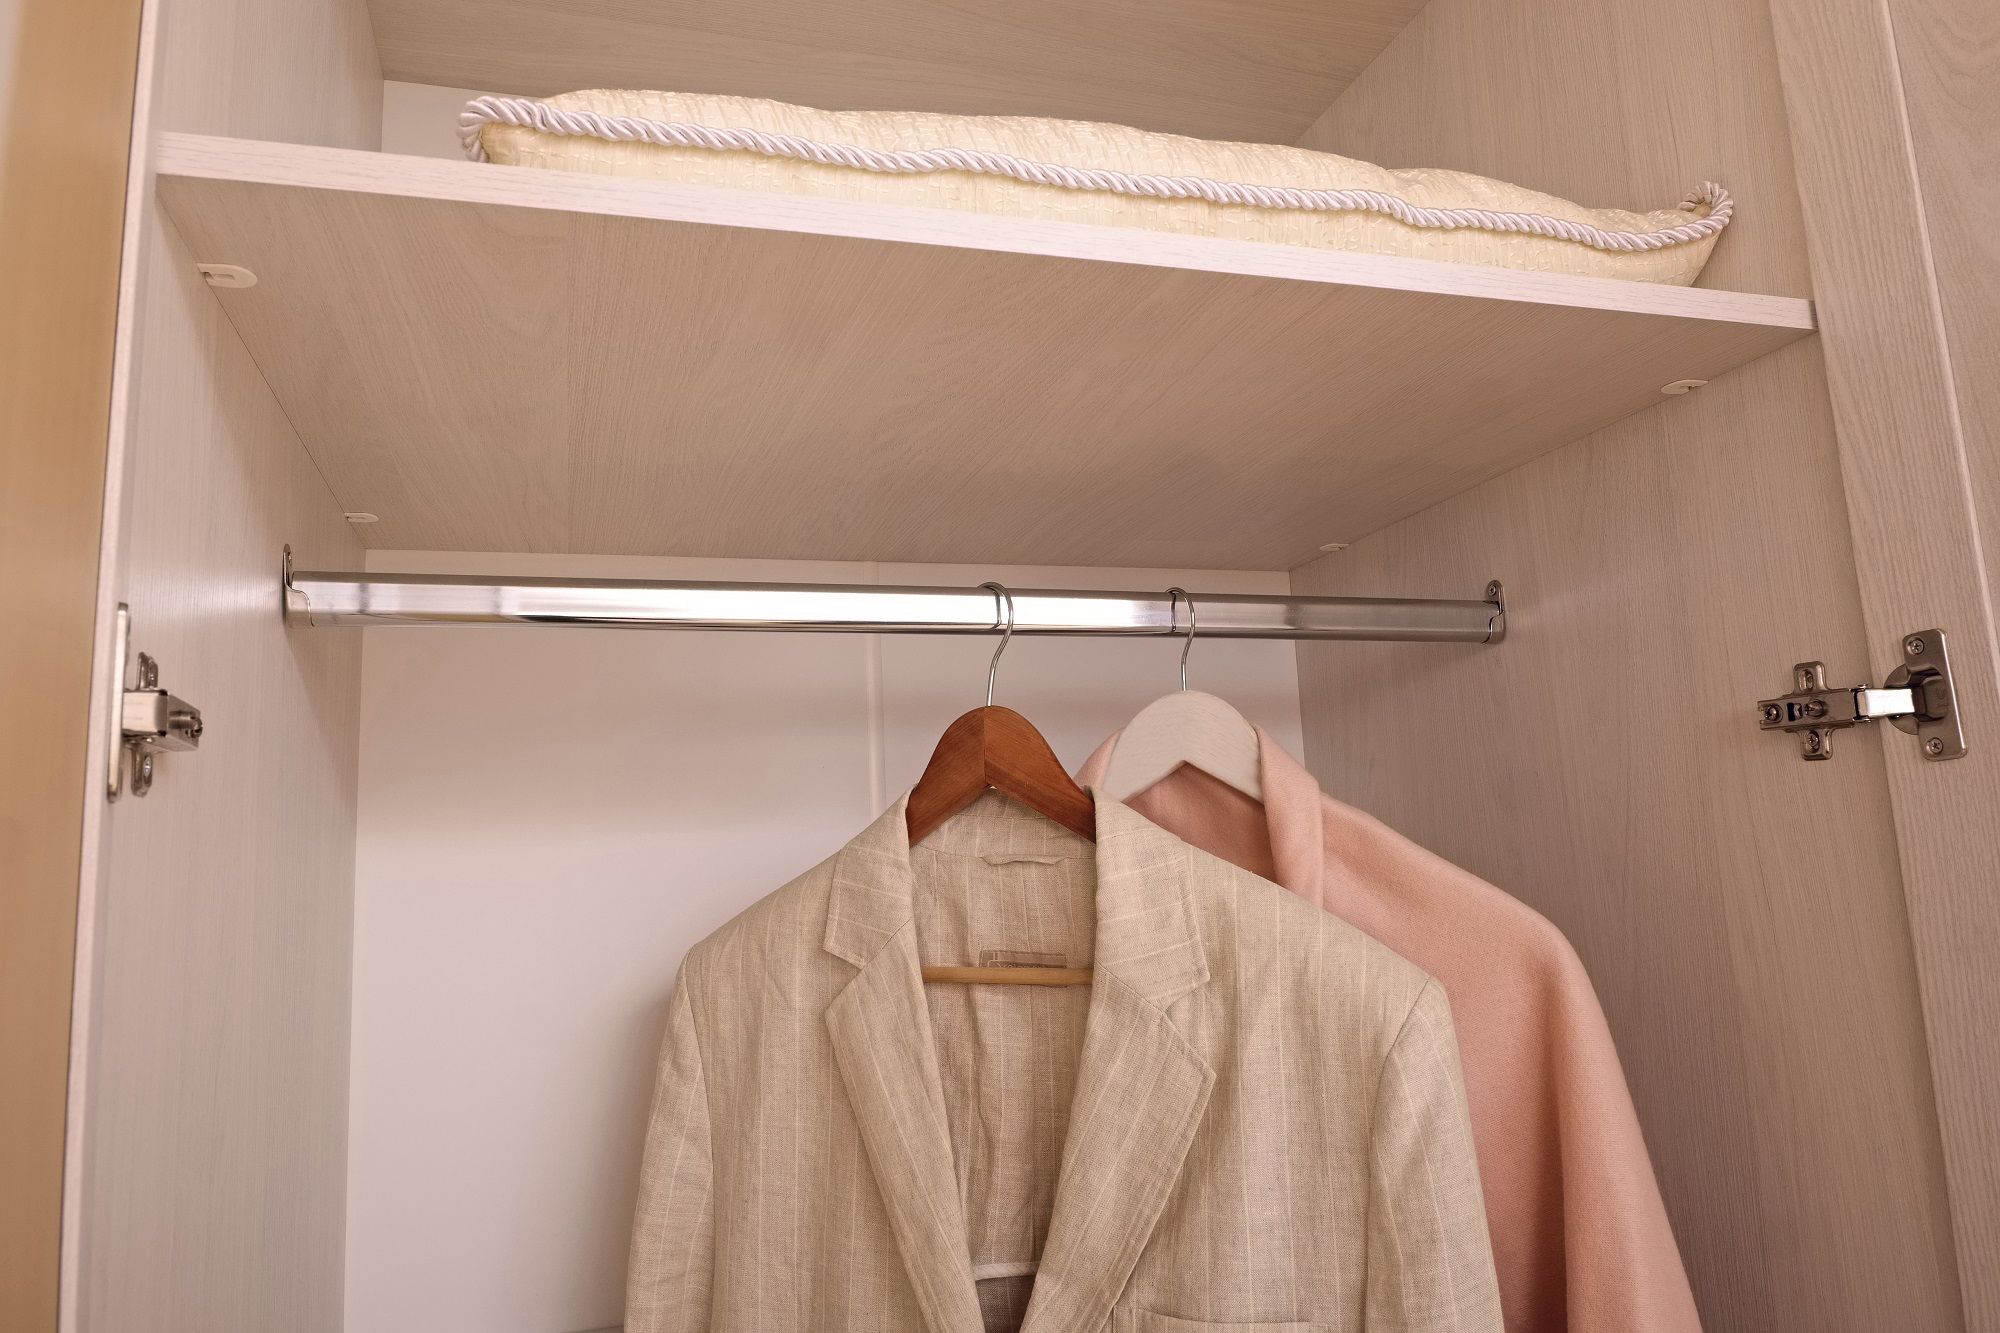 Шкаф для одежды фасад стандарт Paola 54